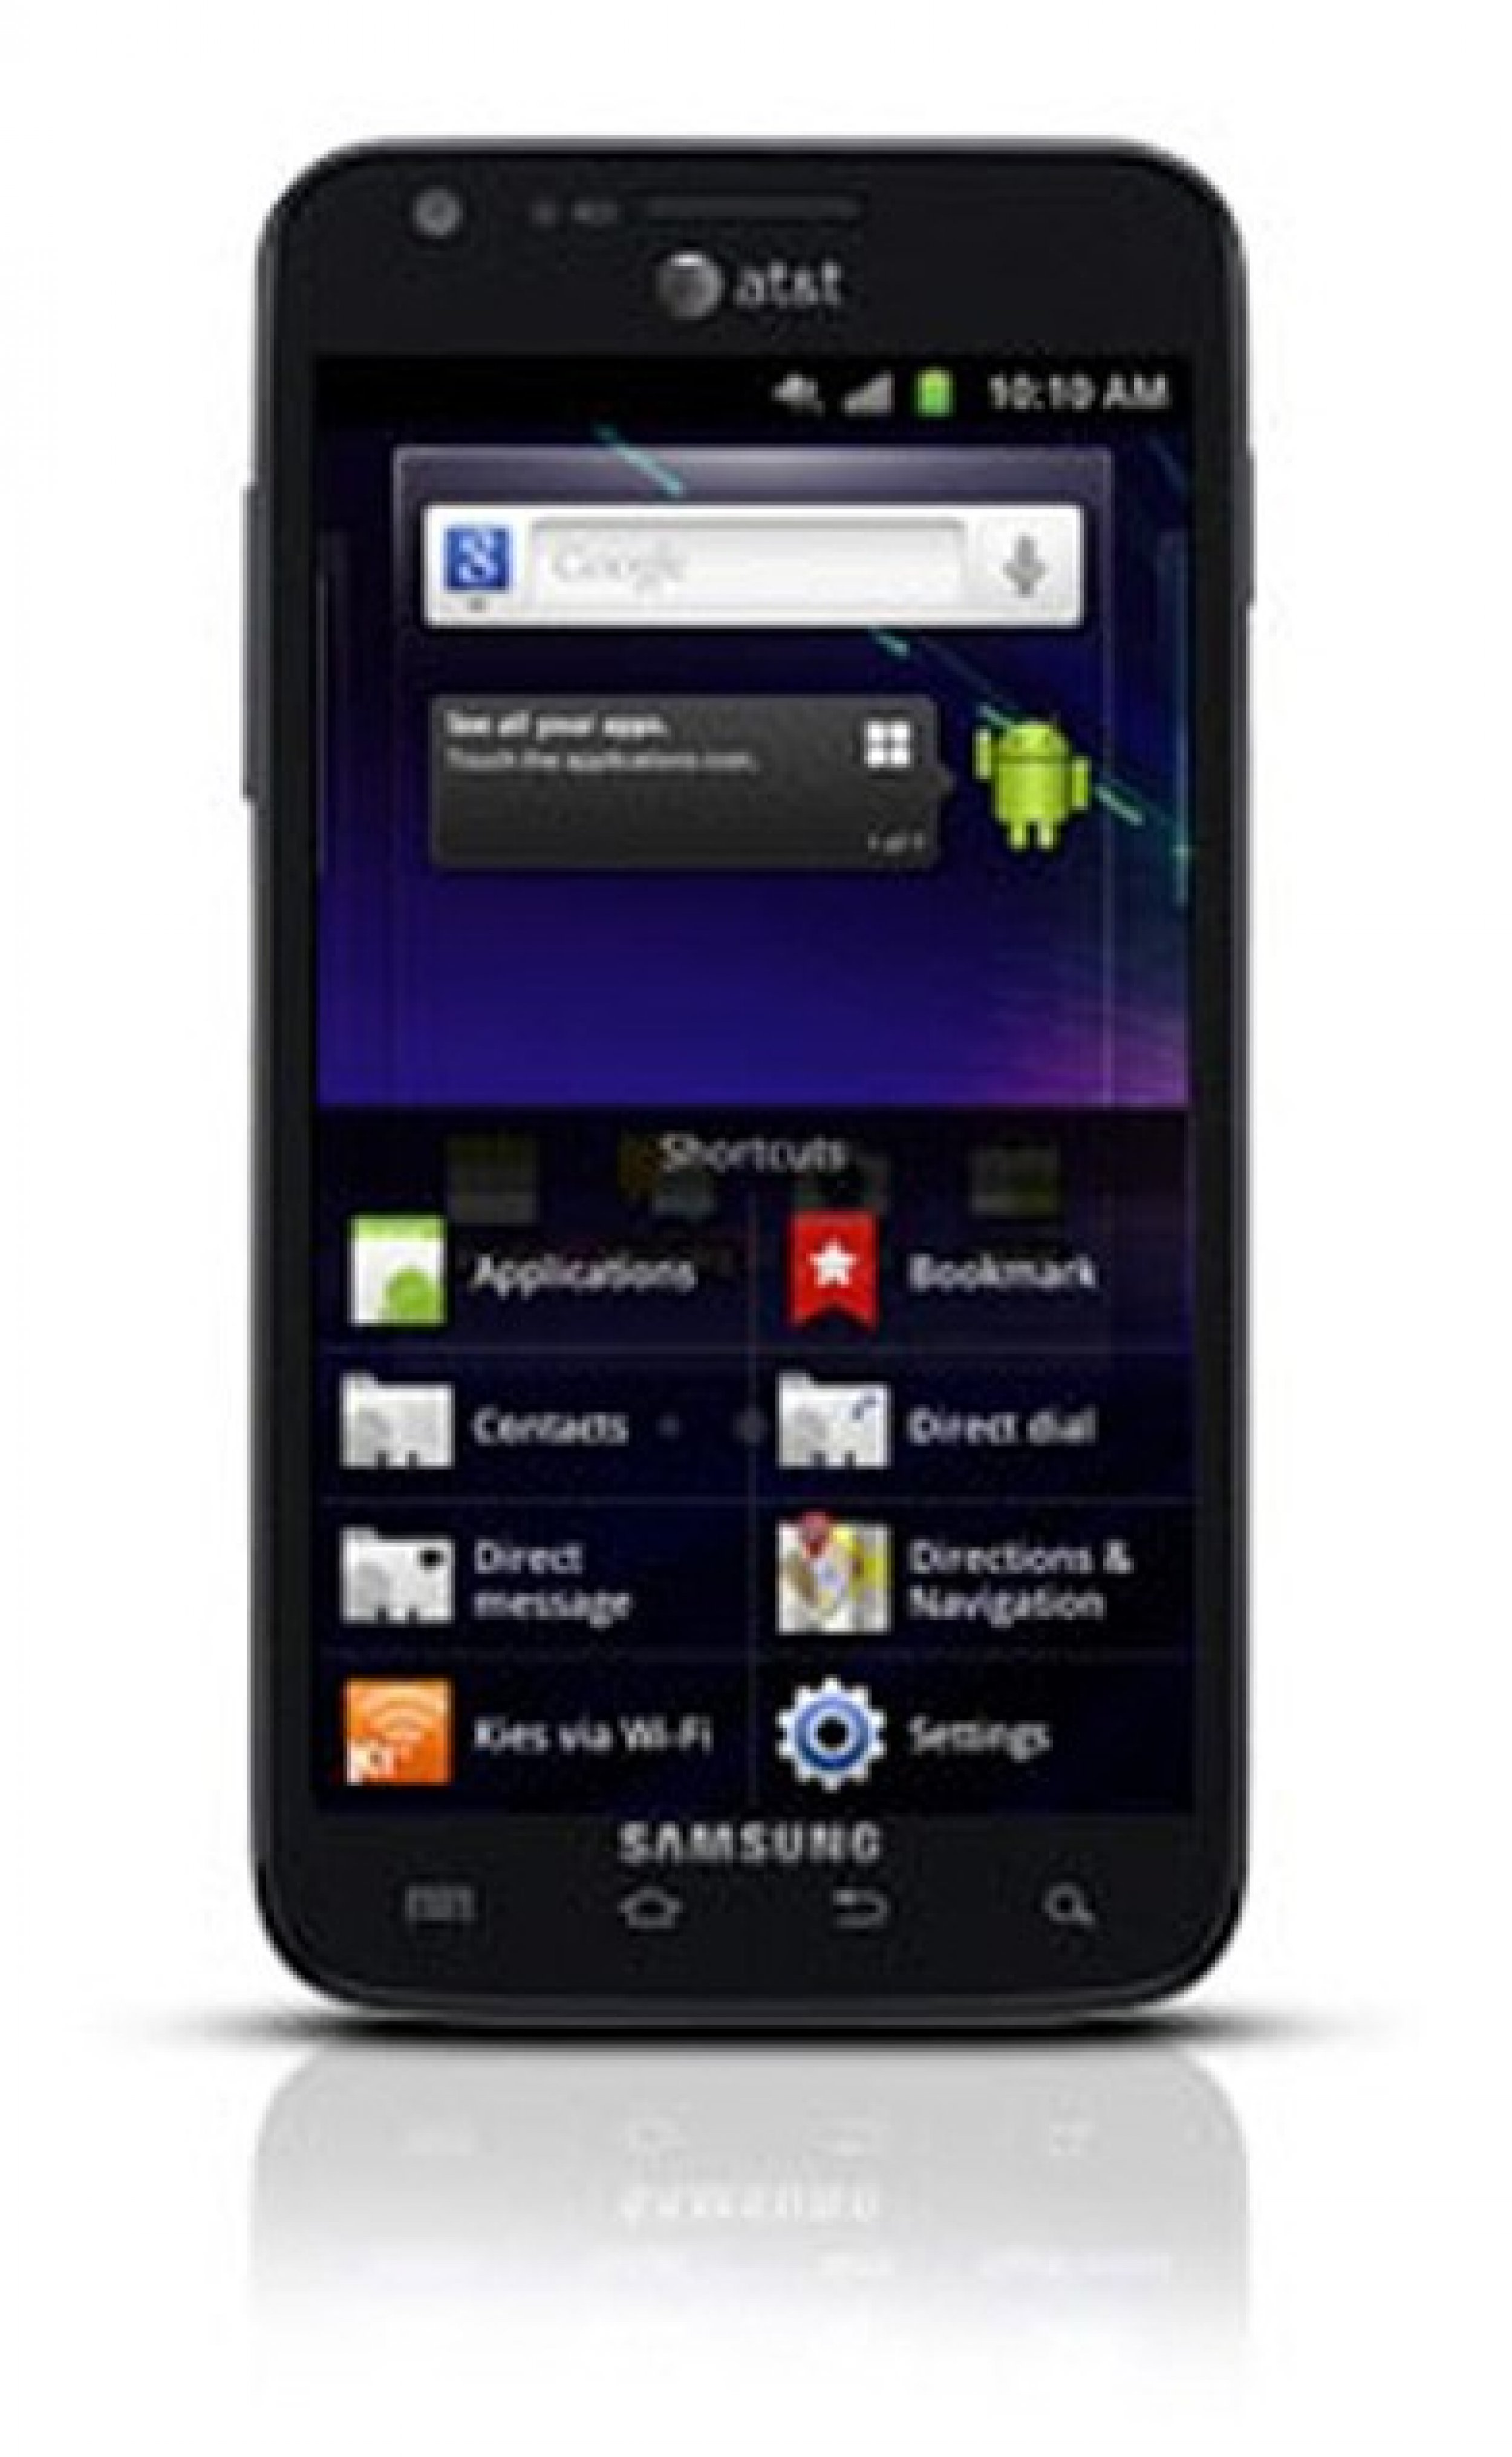 Samsung Galaxy S2 Skyrocket